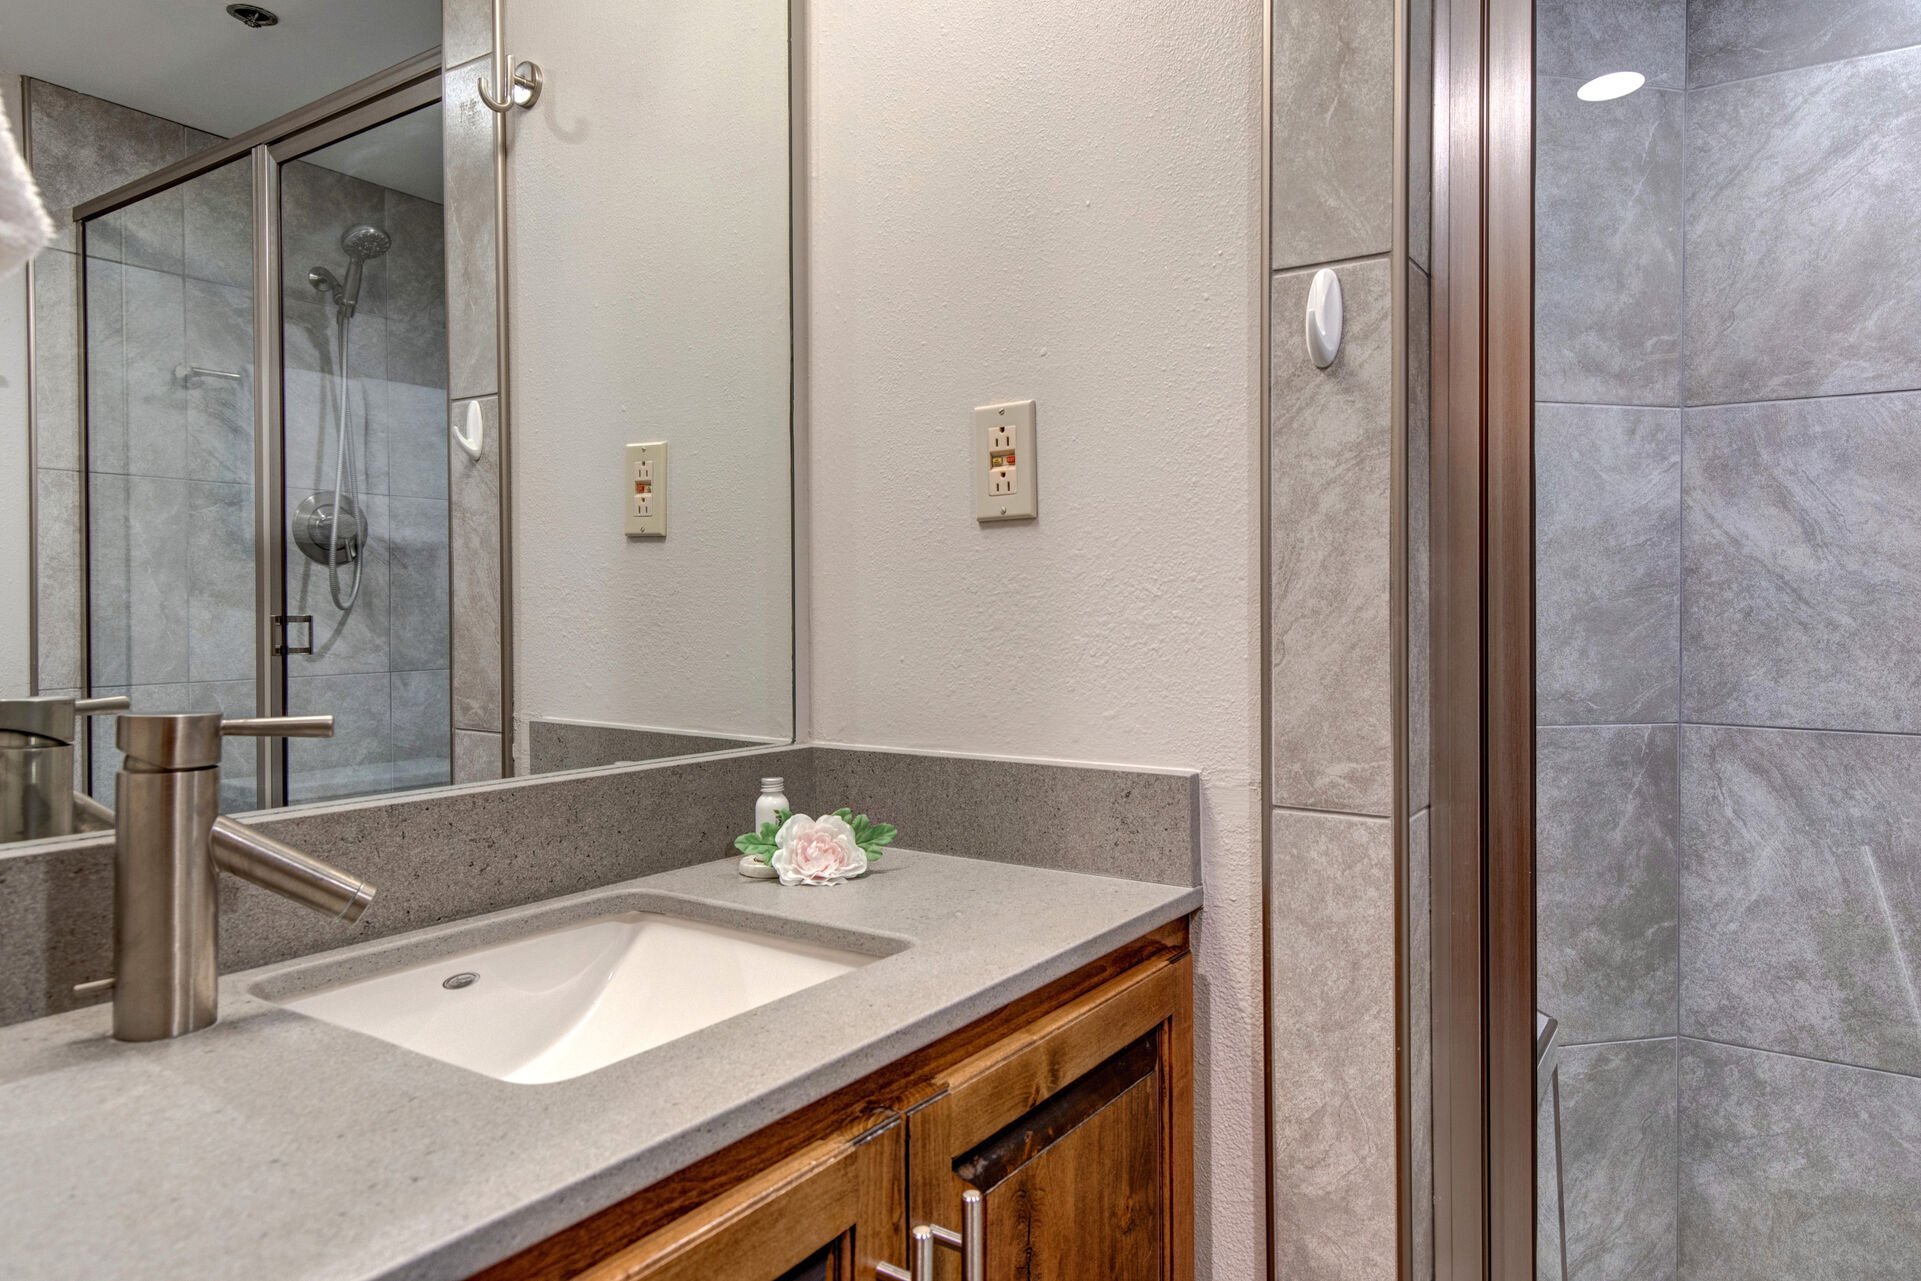 Shared Full Bathroom with tile & glass shower